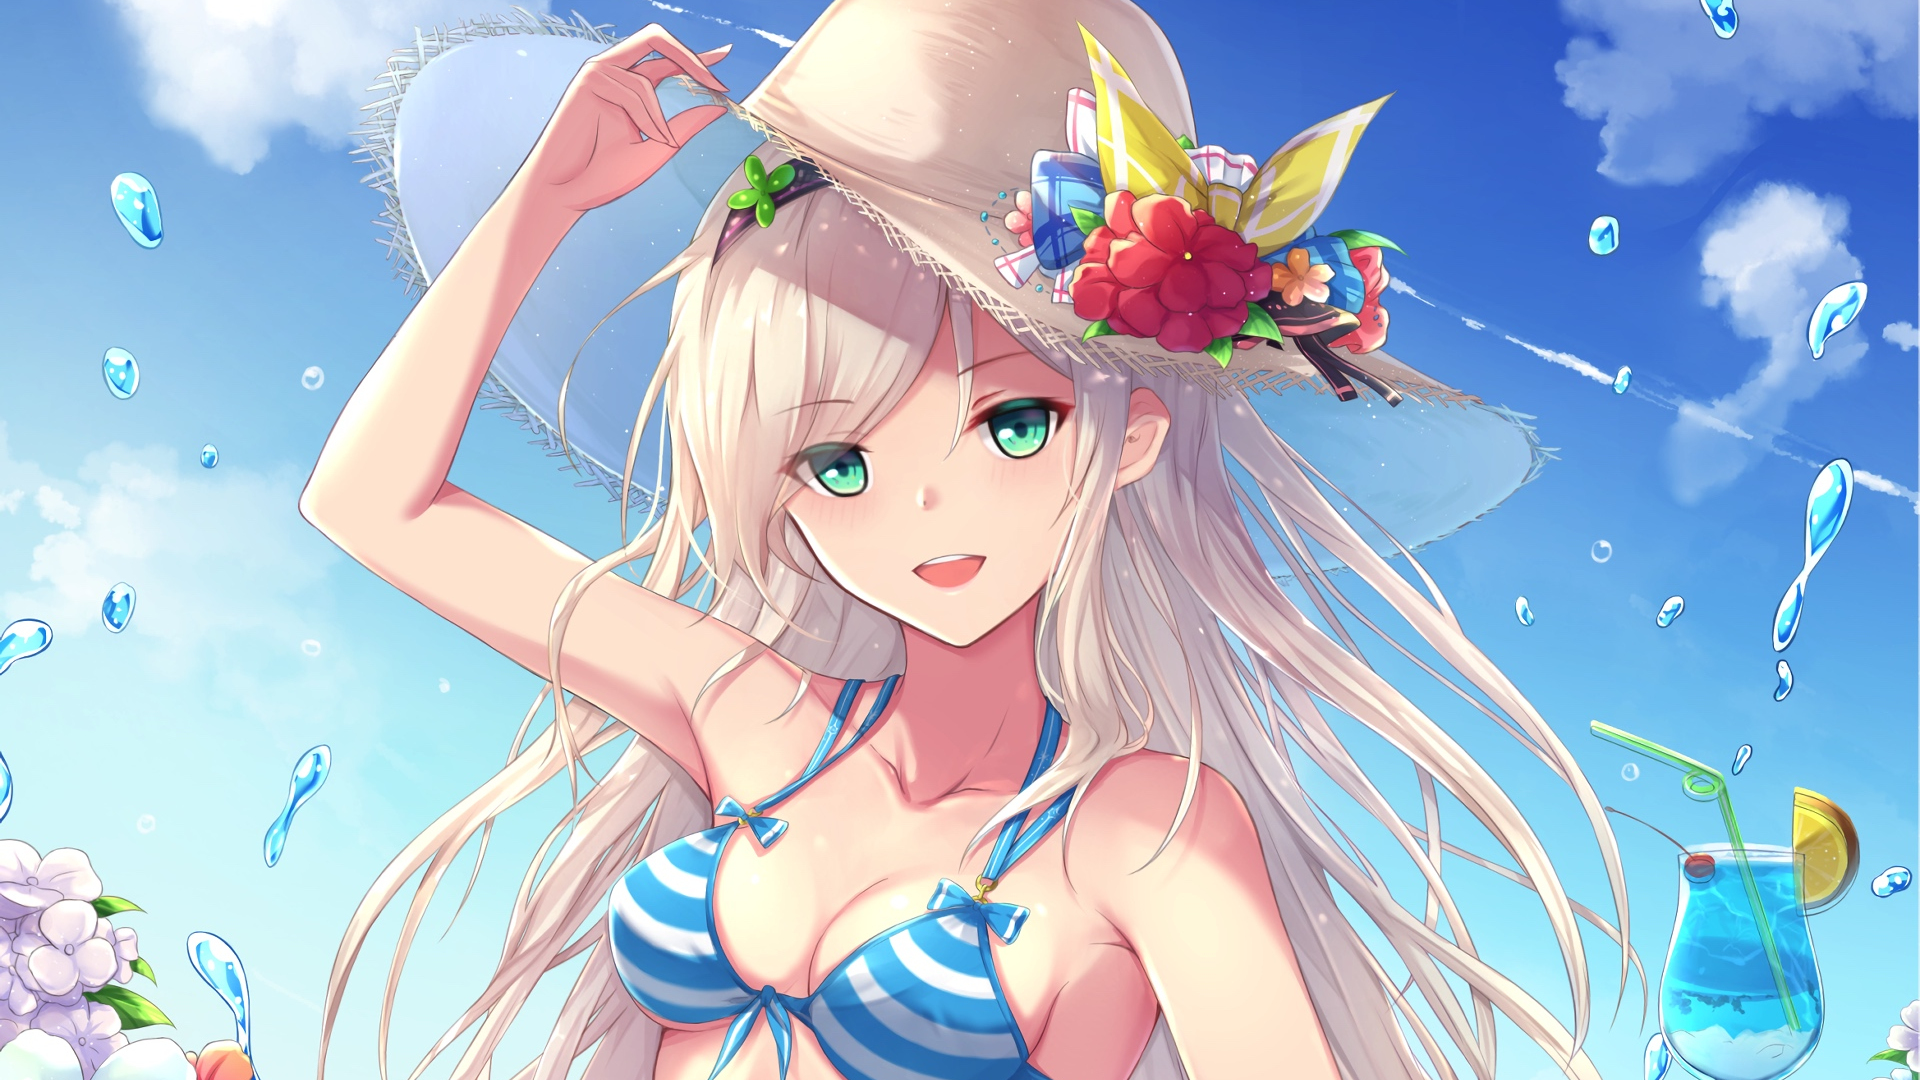 Download 1920x1080 Wallpaper Anime Girl, Holiday, Fun, Bikini, Summer, Full  Hd, Hdtv, Fhd, 1080p, 1920x1080 Hd Image, Background, 22597